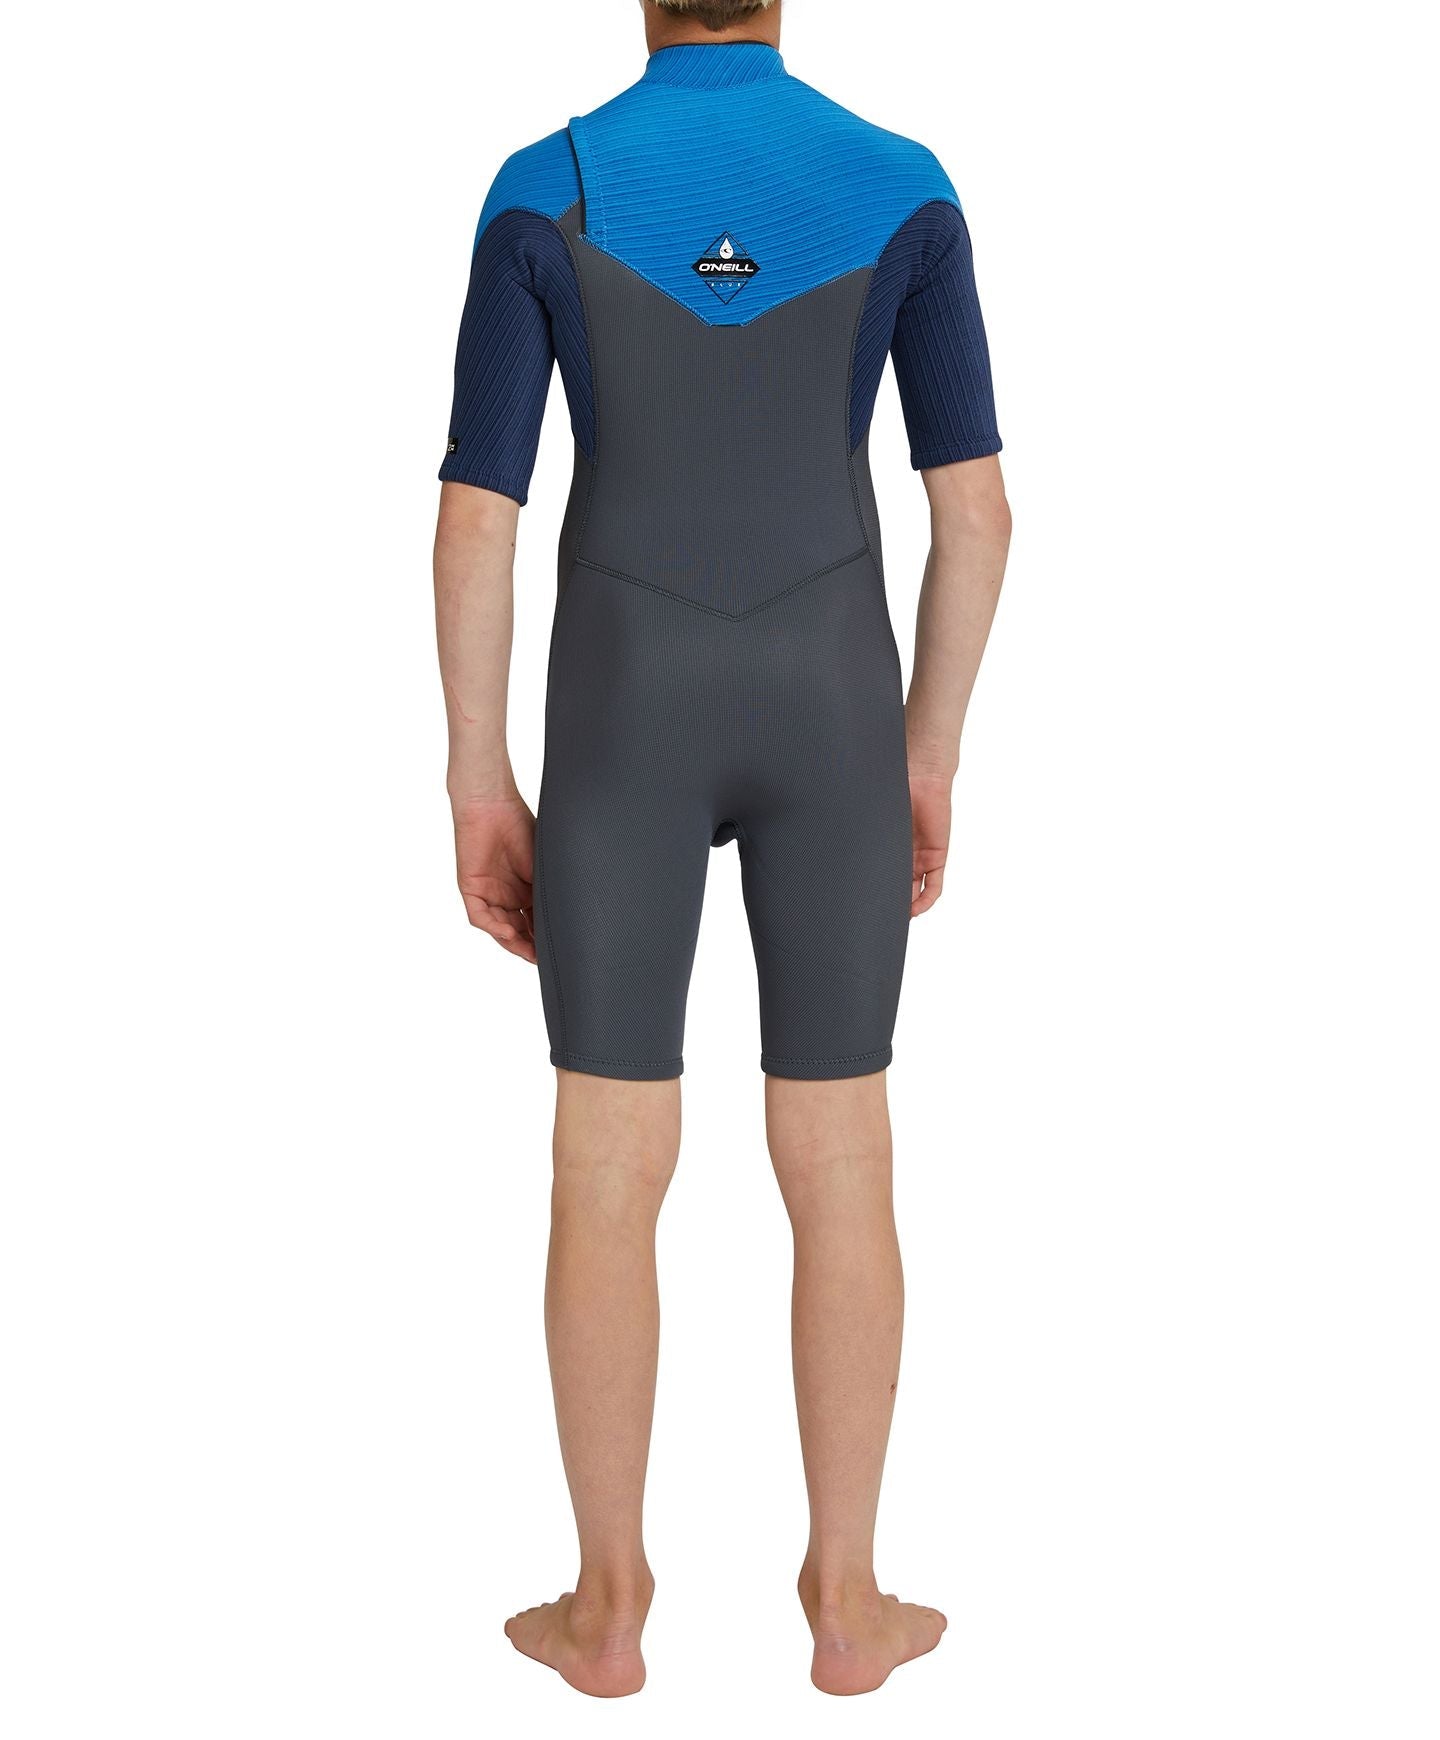 Boy's Hyperfreak 2mm Short Sleeve Springsuit Wetsuit - Graphite